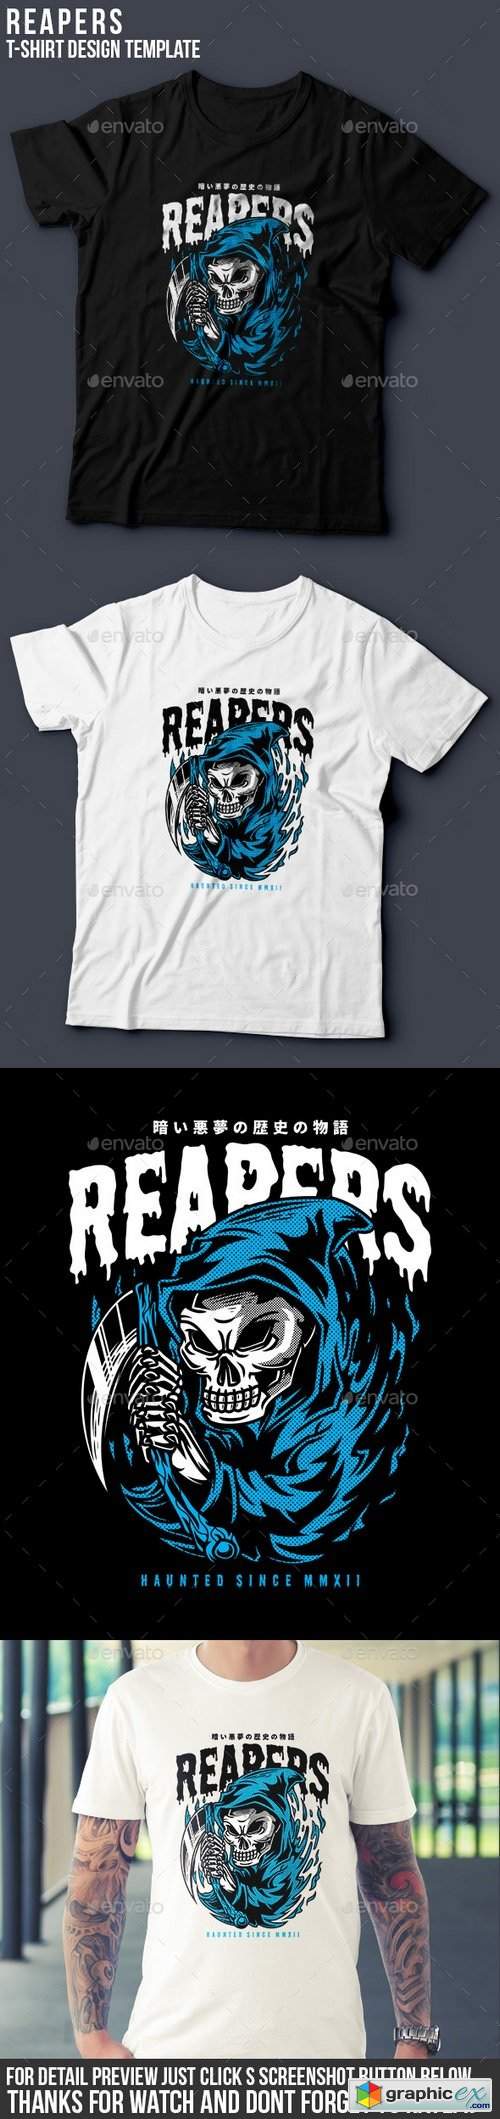 Reapers T-Shirt Design